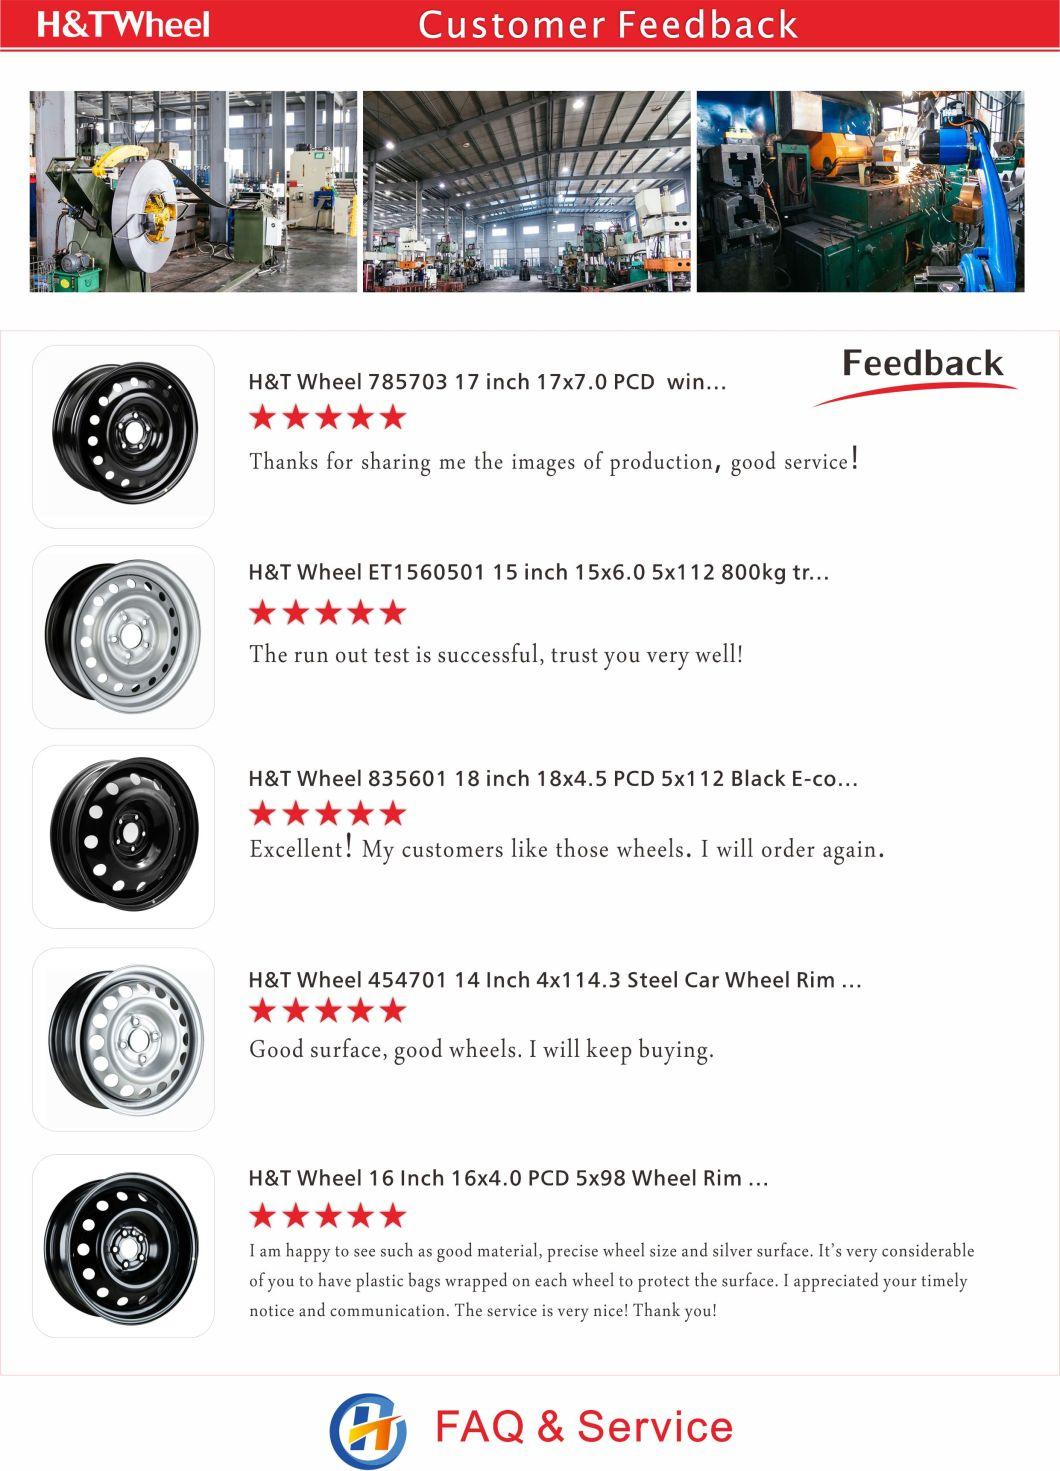 H&T Wheel 334201 High Performance 13X4.5 PCD 4X100 Snow Black Steel 13 Inch Wheel Rims for Sale